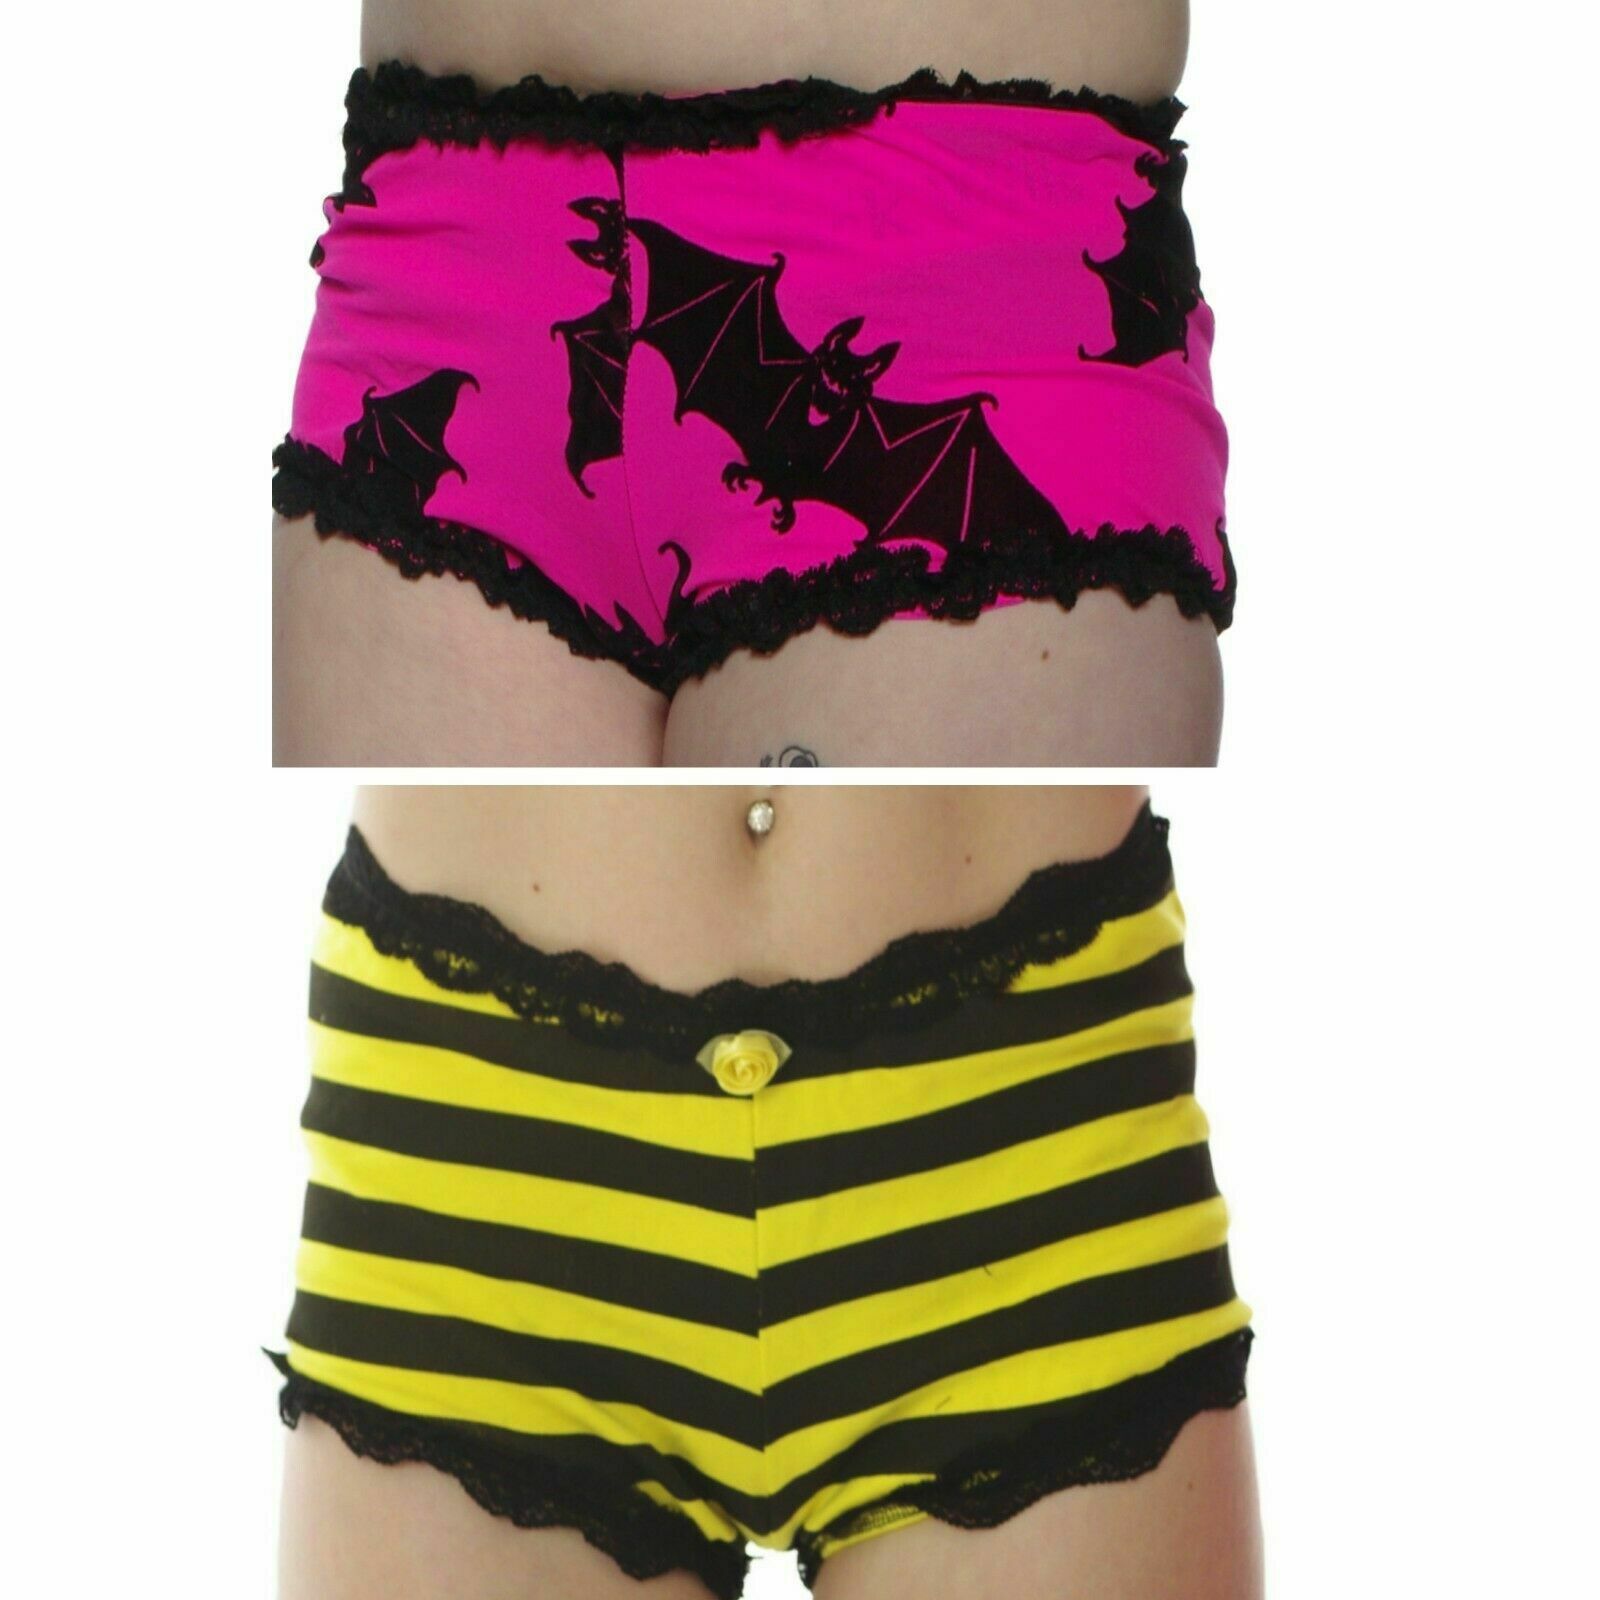 festival punk LACE EDGE SHORTS HOT PANTS pink/black BATS STRIPED yellow/black